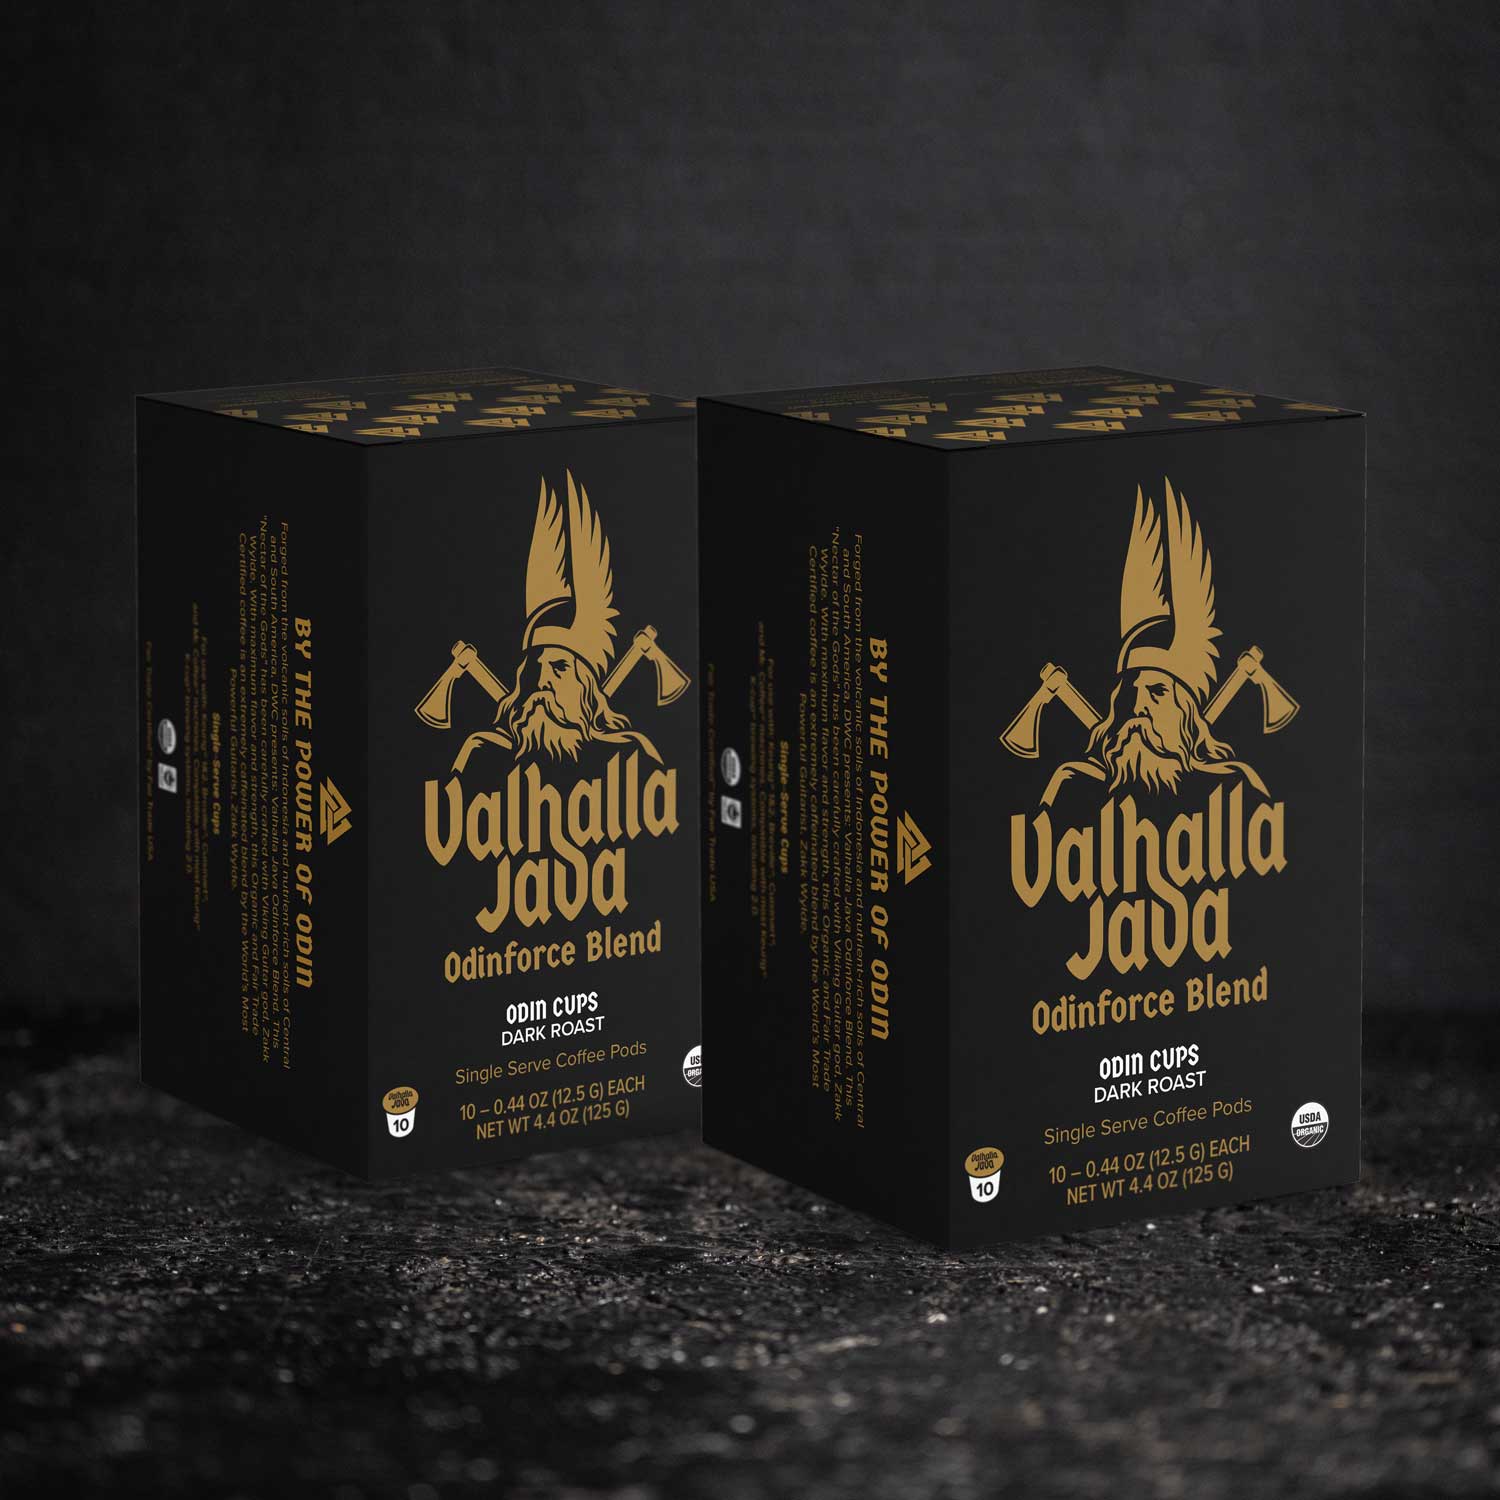 Death Wish Coffee Valhalla Java Odinforce Blend Single-Serve Coffee Pods